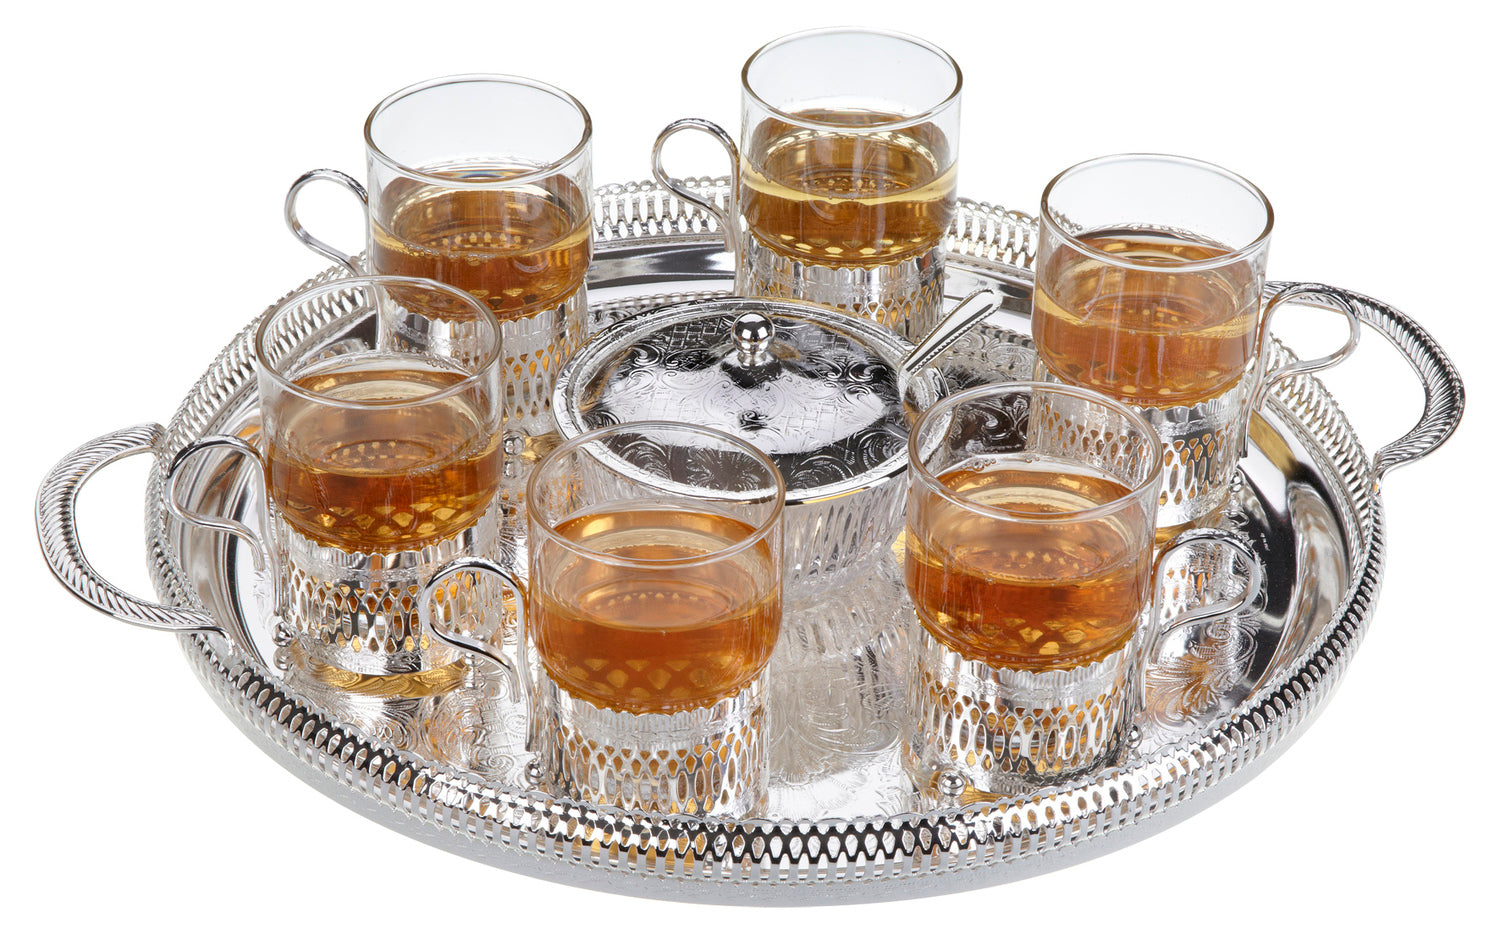 Queen Anne Round Tray Tea Set with 6 Tea Cups, Sugar Dish & Spoon